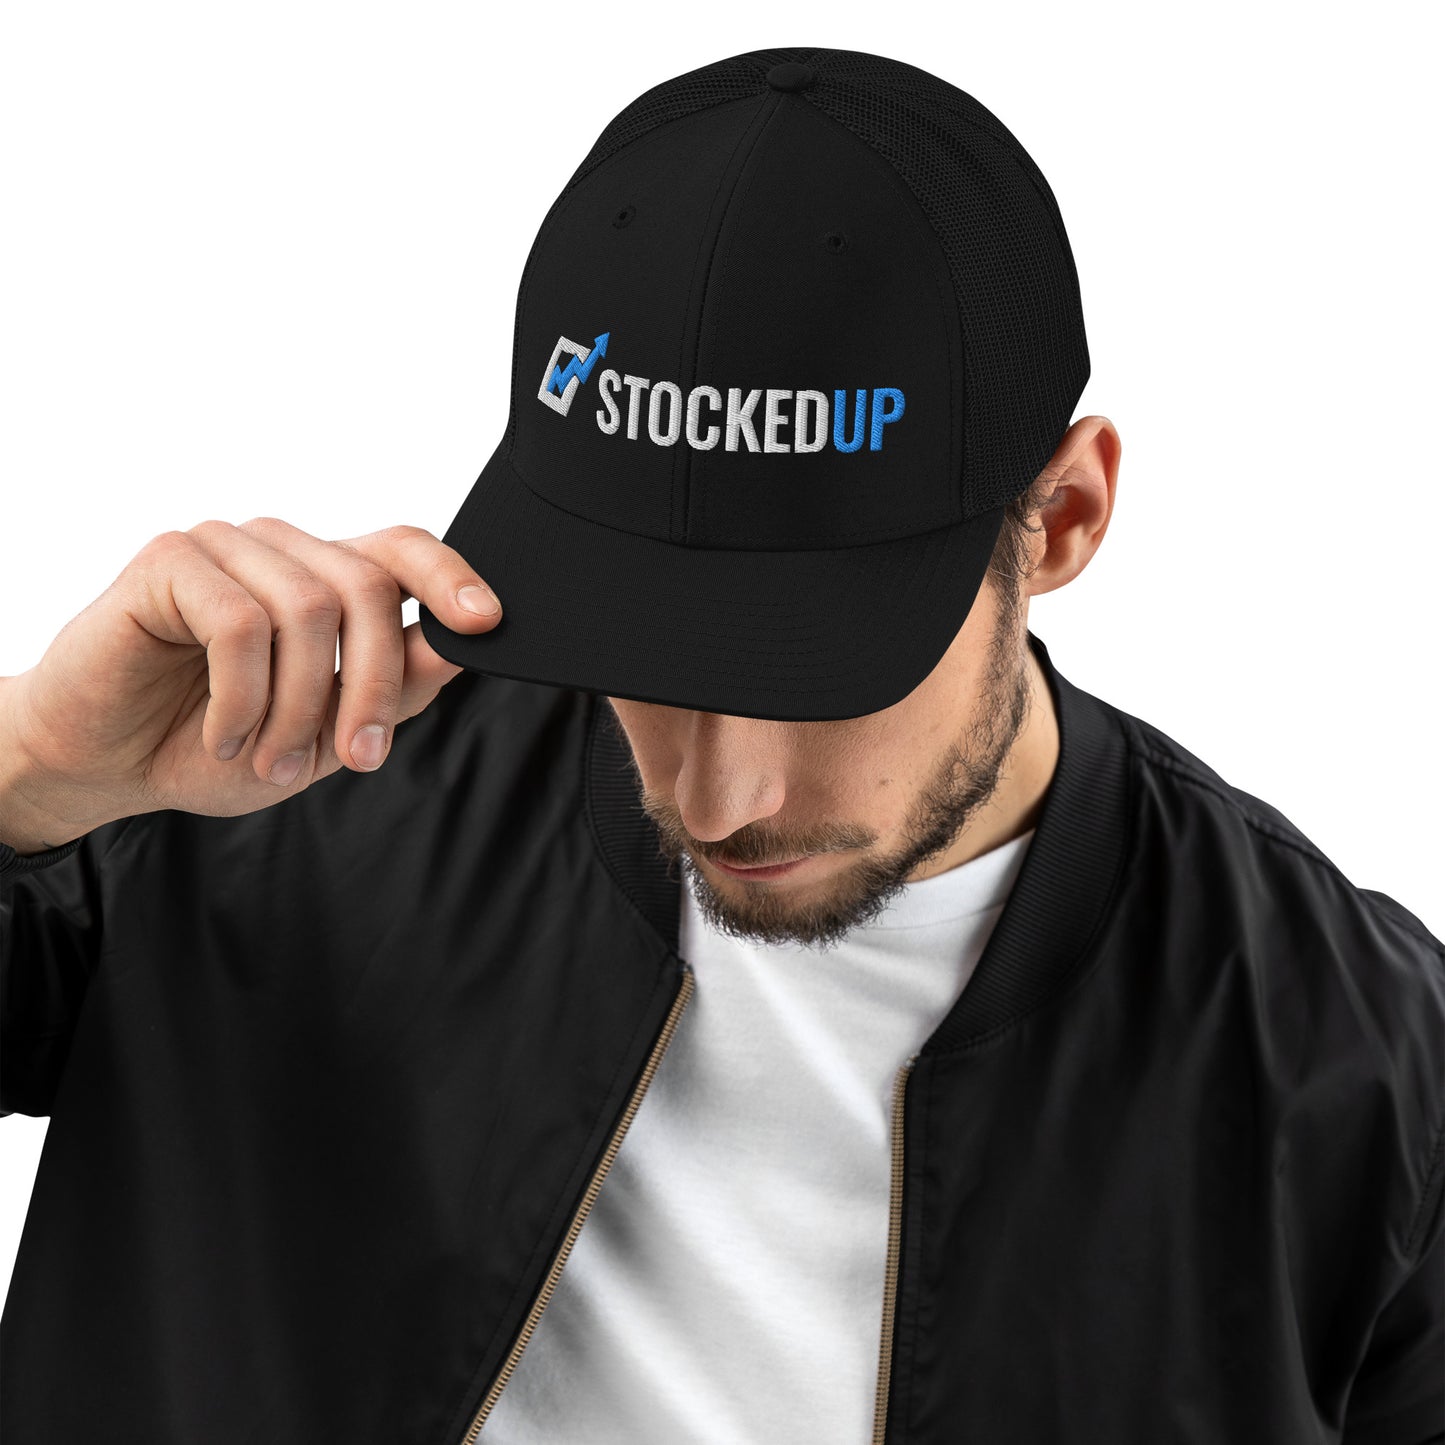 StockedUp Trucker Snapback (Black/Black)